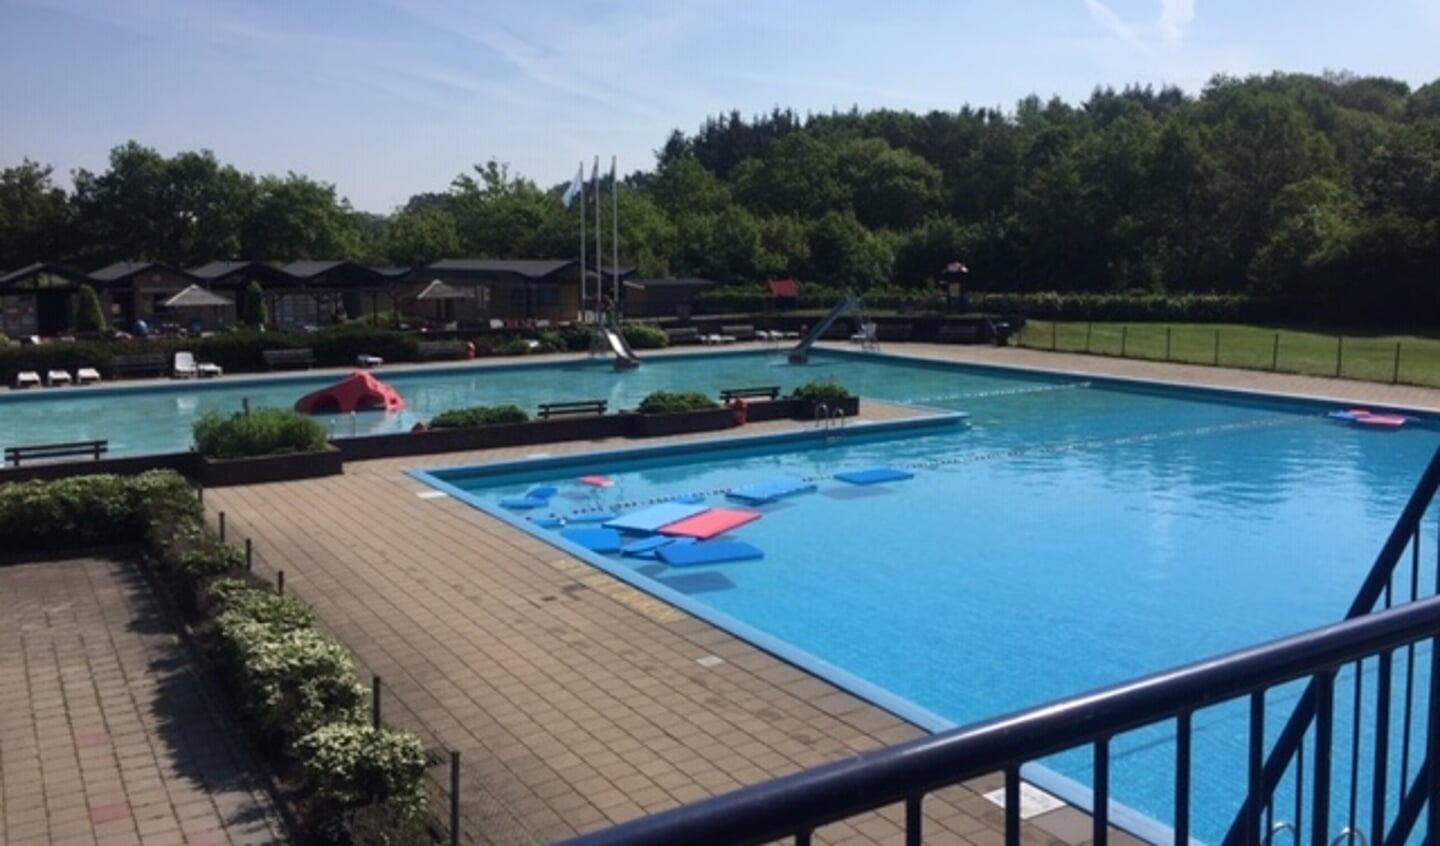 Zwembad de Boskoele in Gorssel. Foto: PR